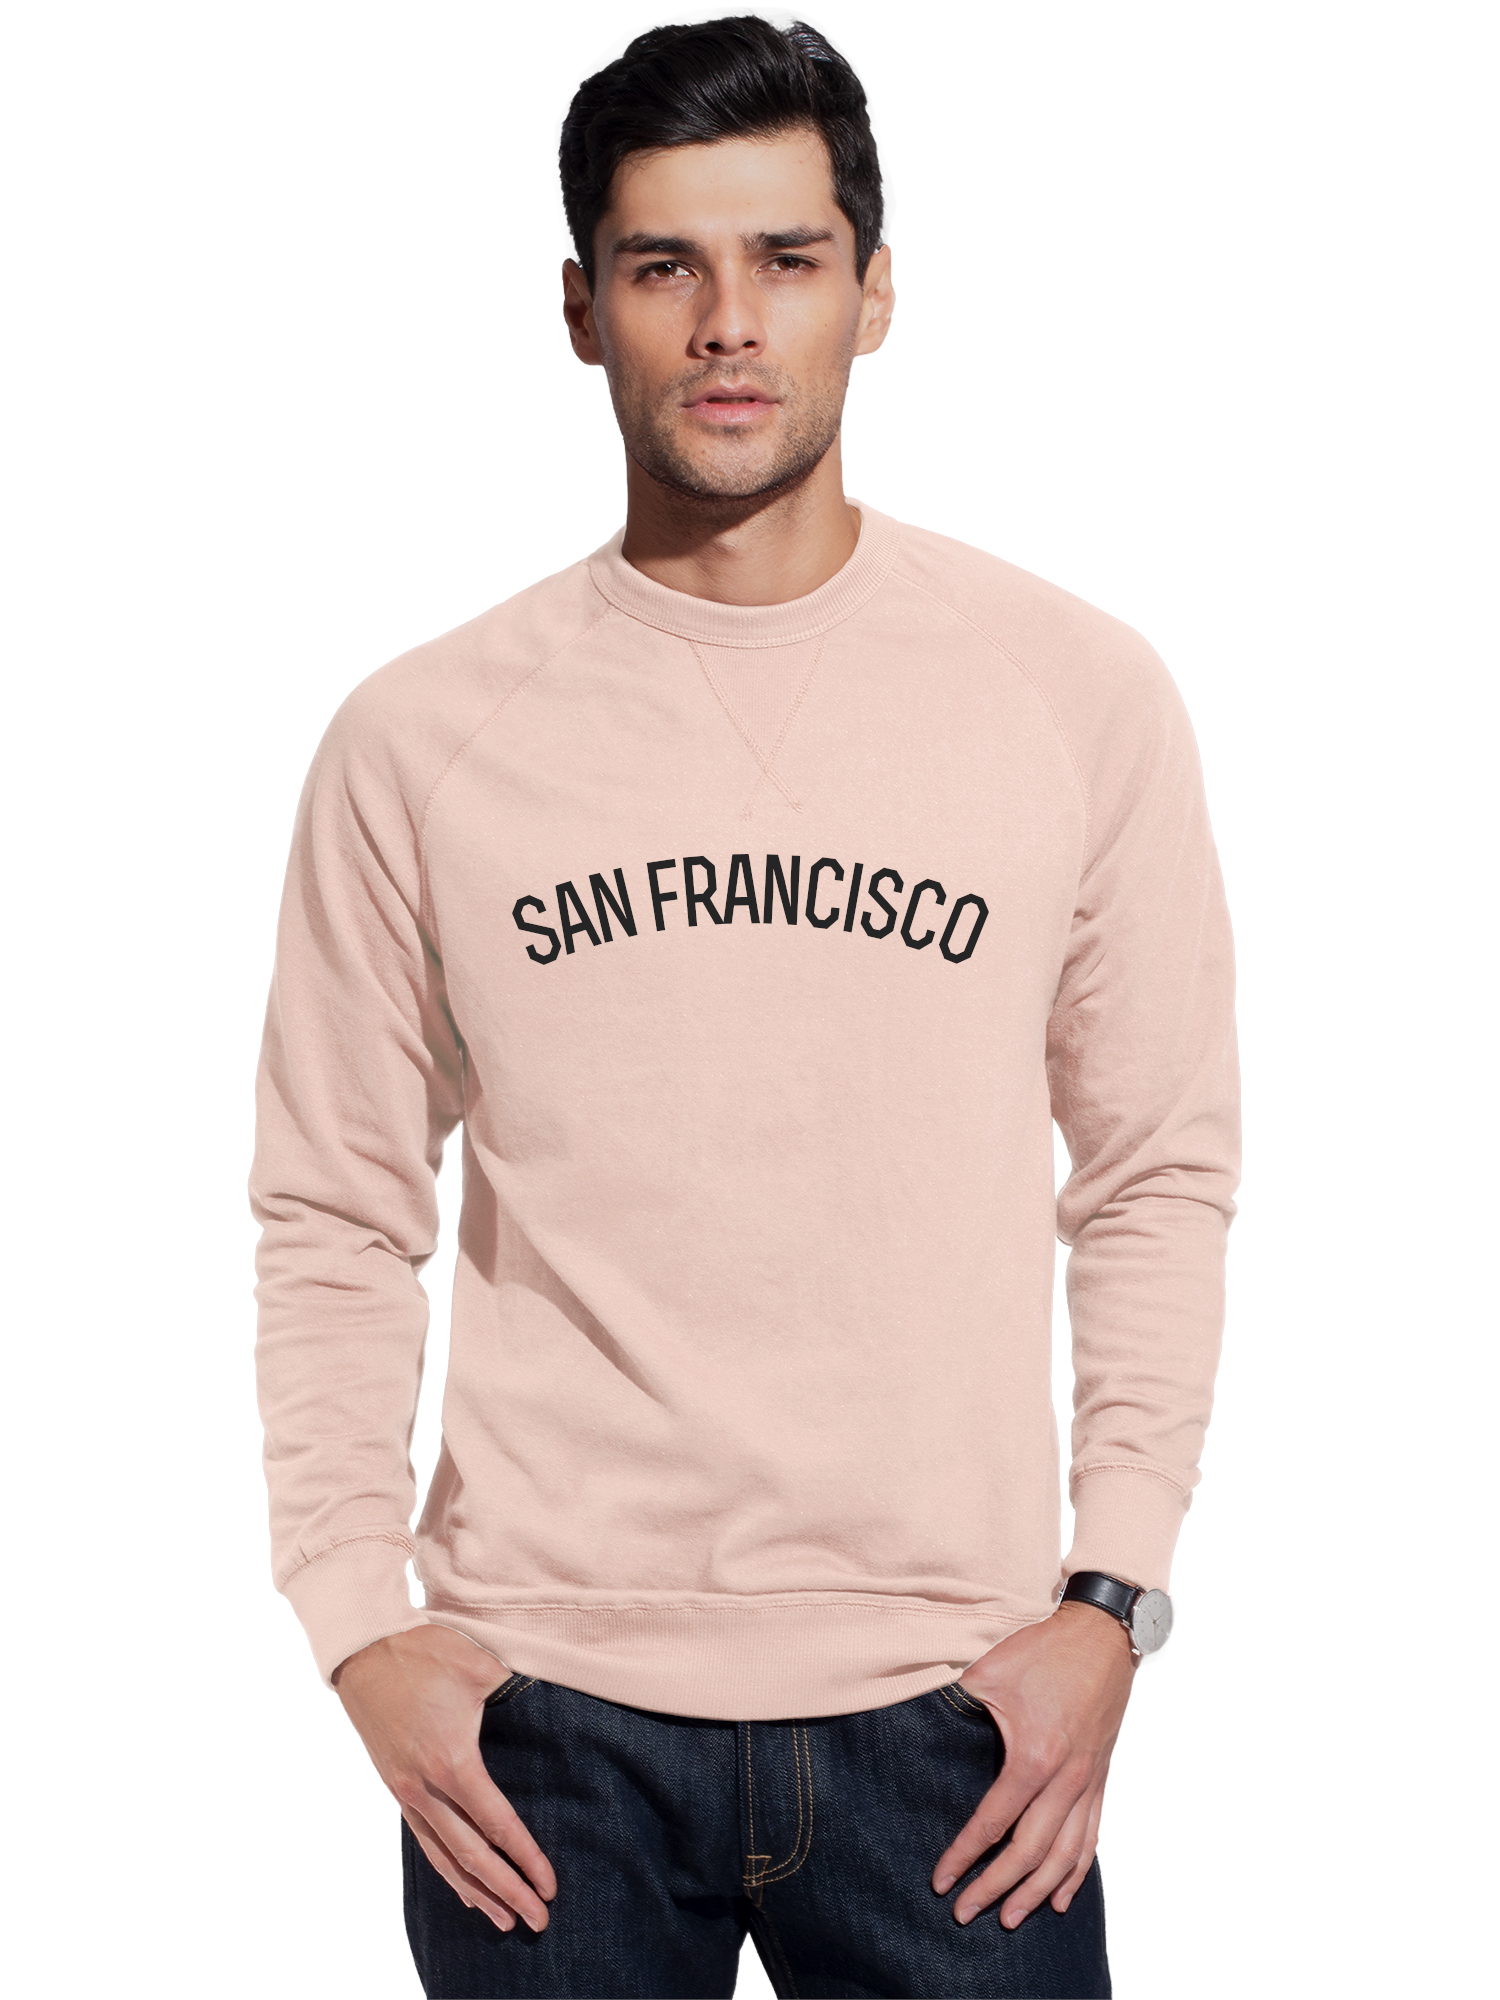 Daxton San Francisco Sweatshirt Athletic Pullover Crewneck French Terry Fabric, Peach Sweatshirt Black Letters, 2XL - image 1 of 3